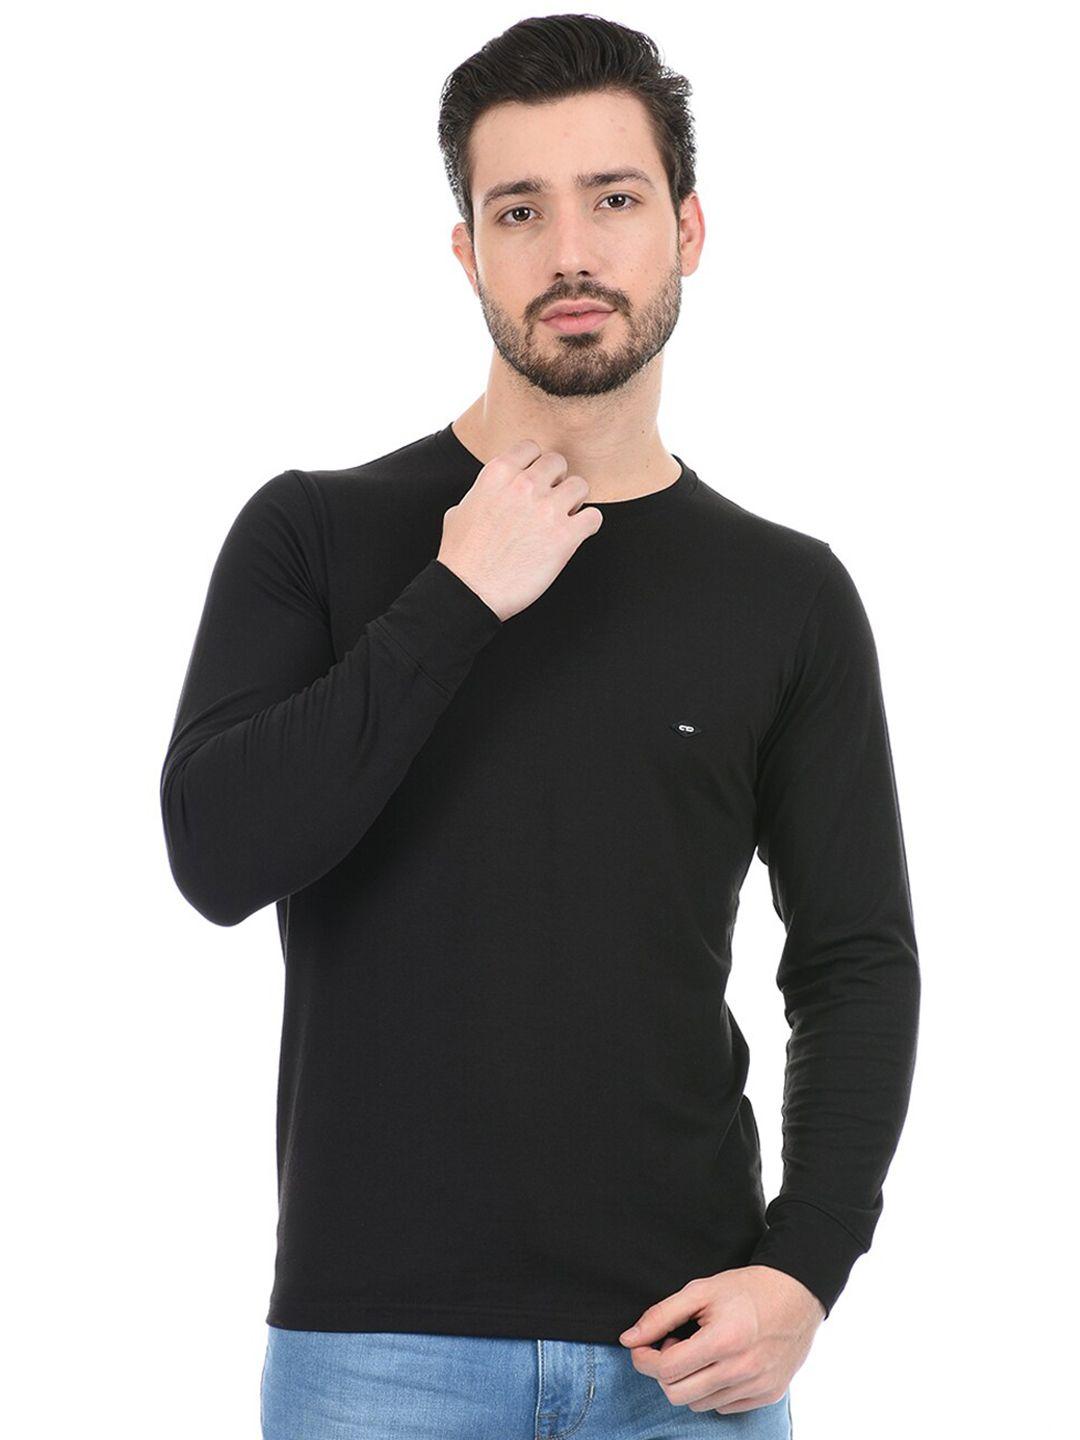 cloak & decker by monte carlo men black cotton t-shirt